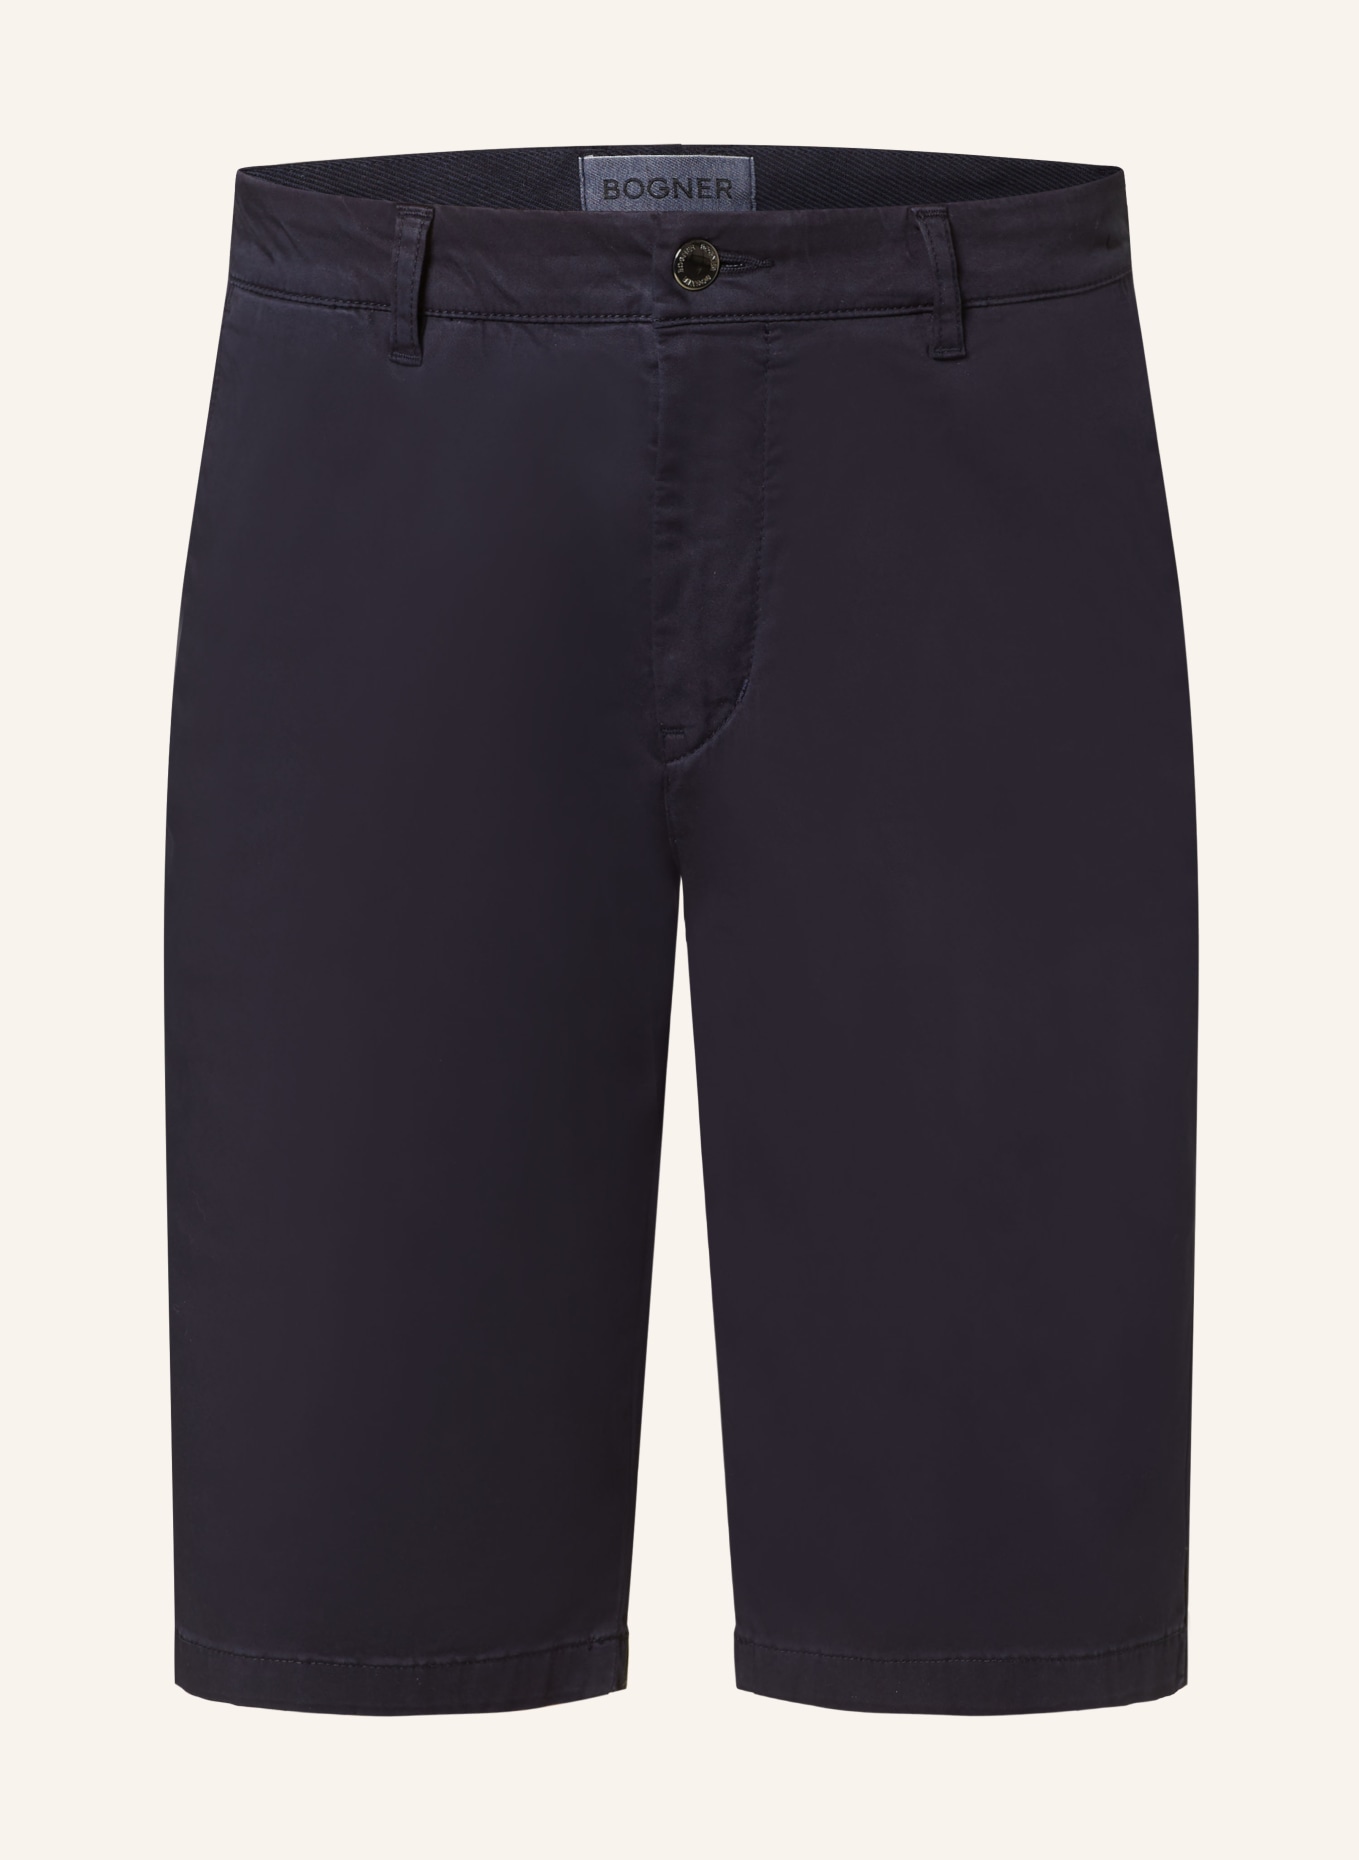 BOGNER Shorts MIAMI-G6, Farbe: DUNKELBLAU (Bild 1)